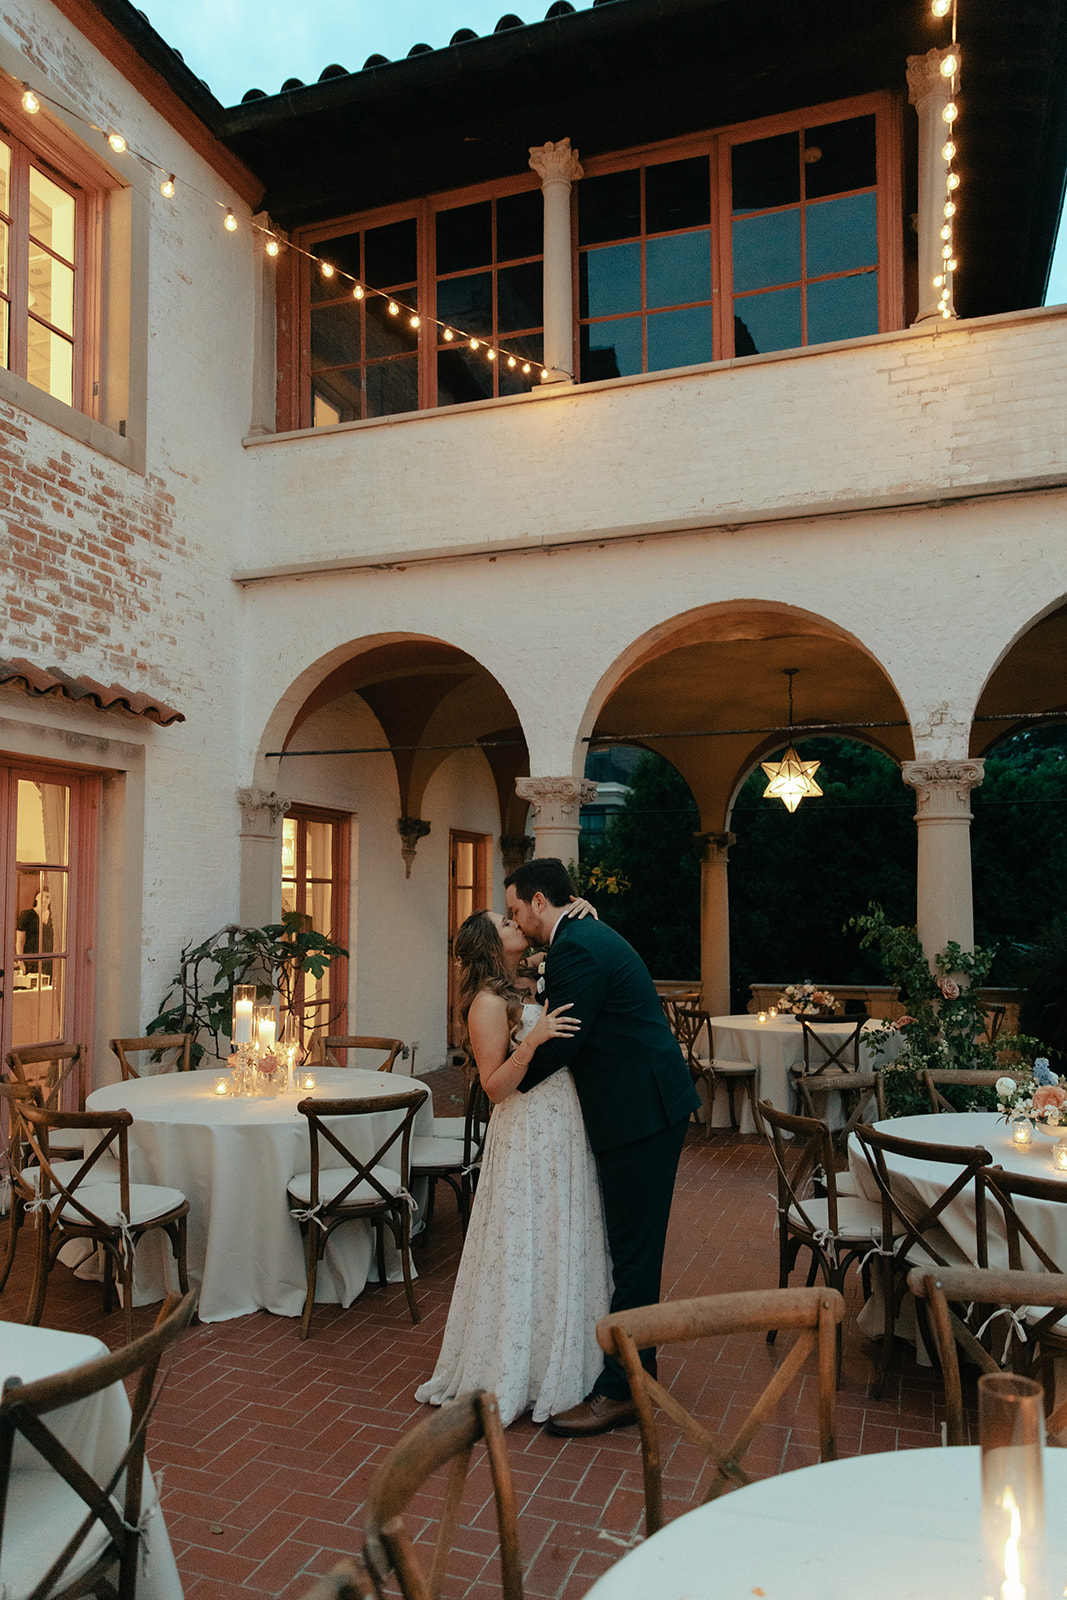 Villa Terrace at night time - Wedding